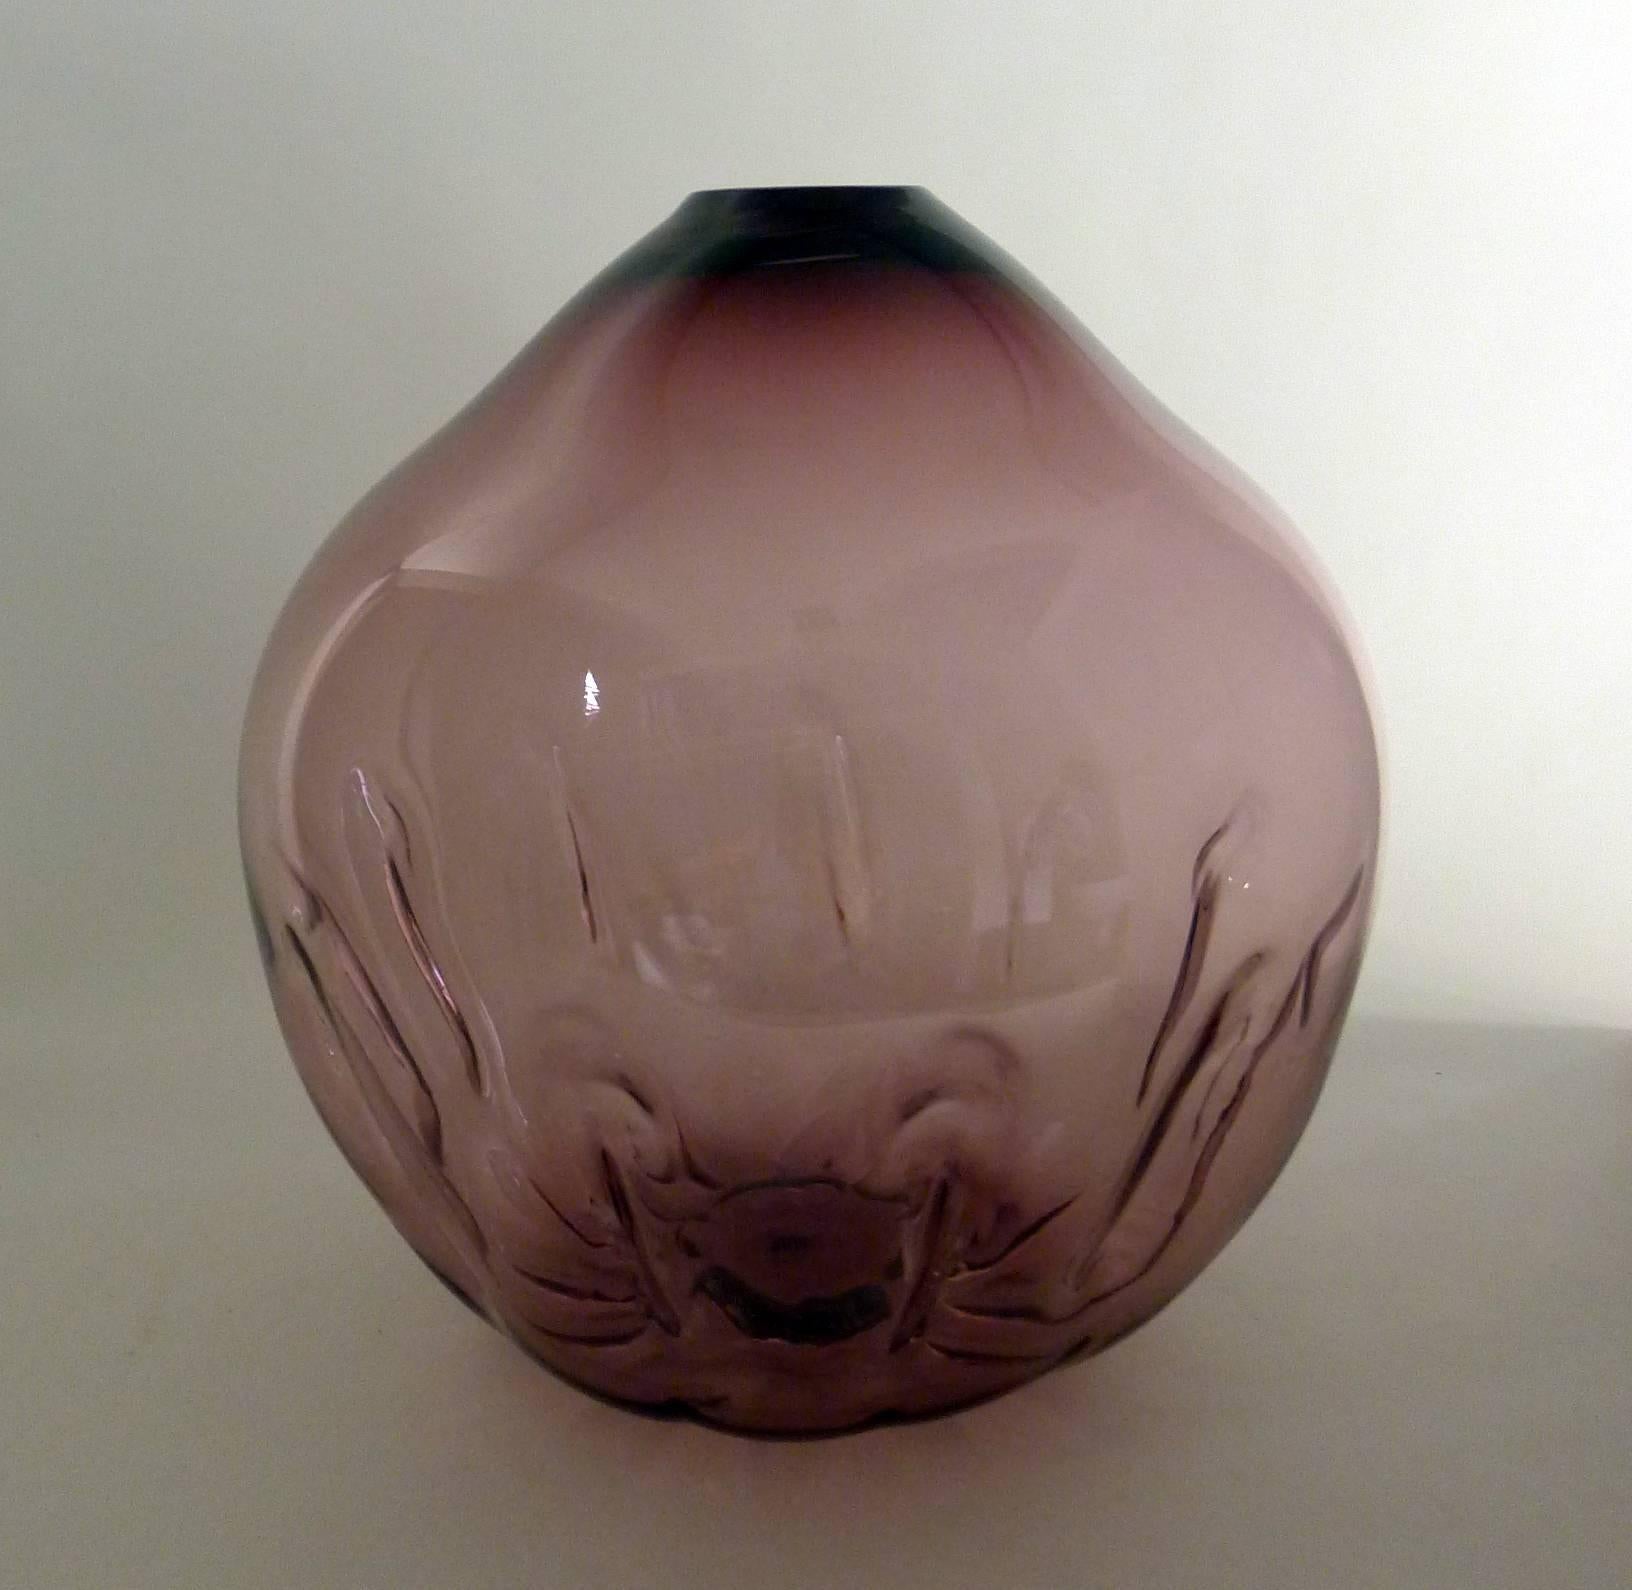 A unique purple soliflor vase designed by Swiss architect Christian Geissbuhler
Blown by Cenedese Albarelli Vetreria in Murano Venezia
Signed underneath.
  